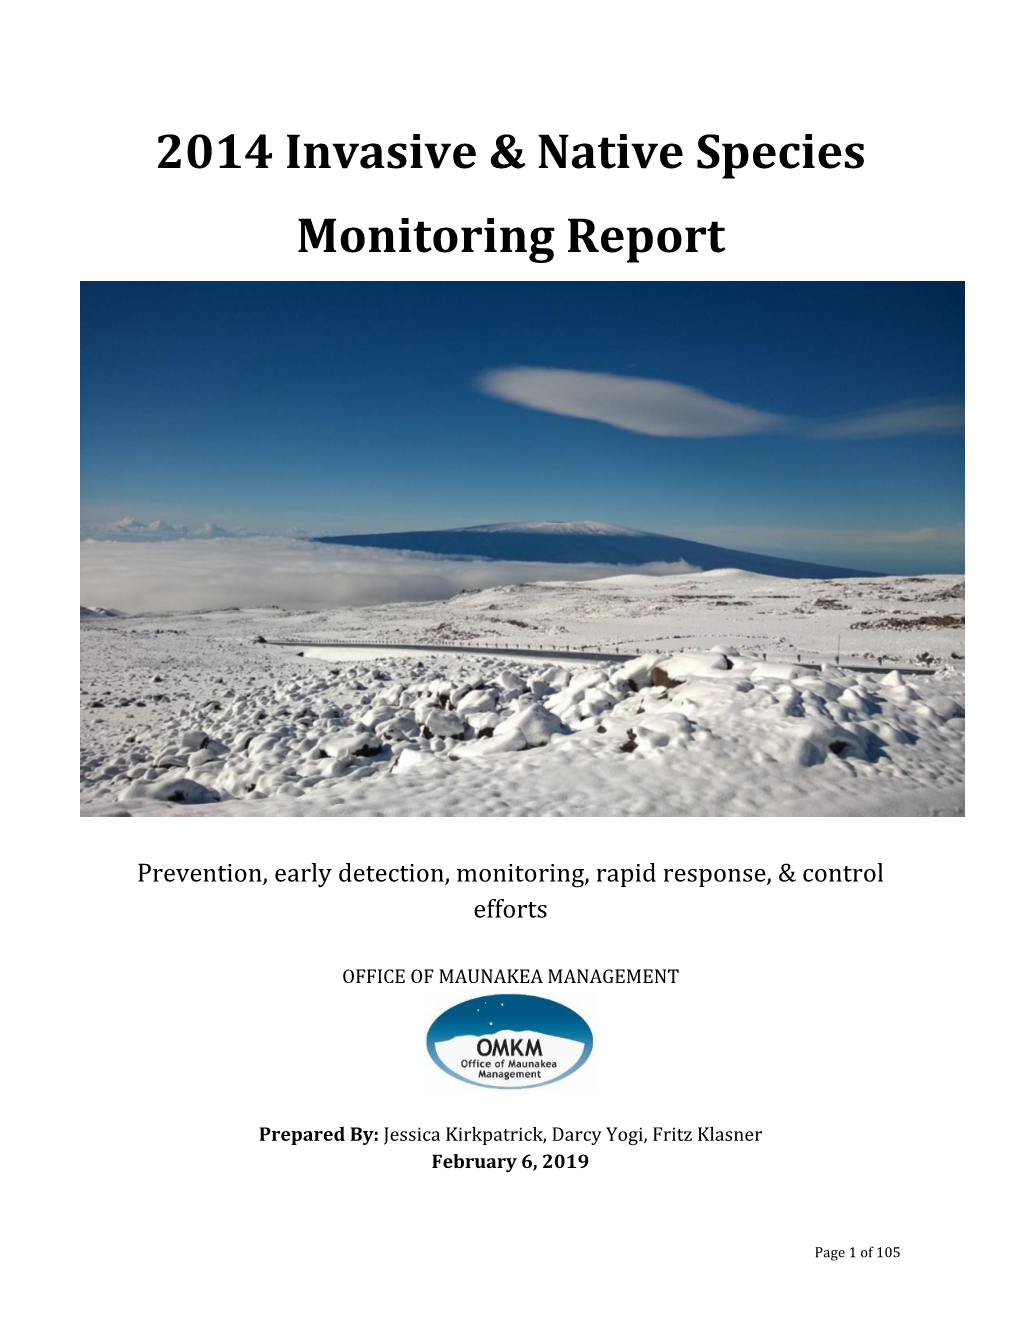 2014 Invasive & Native Species Monitoring Report